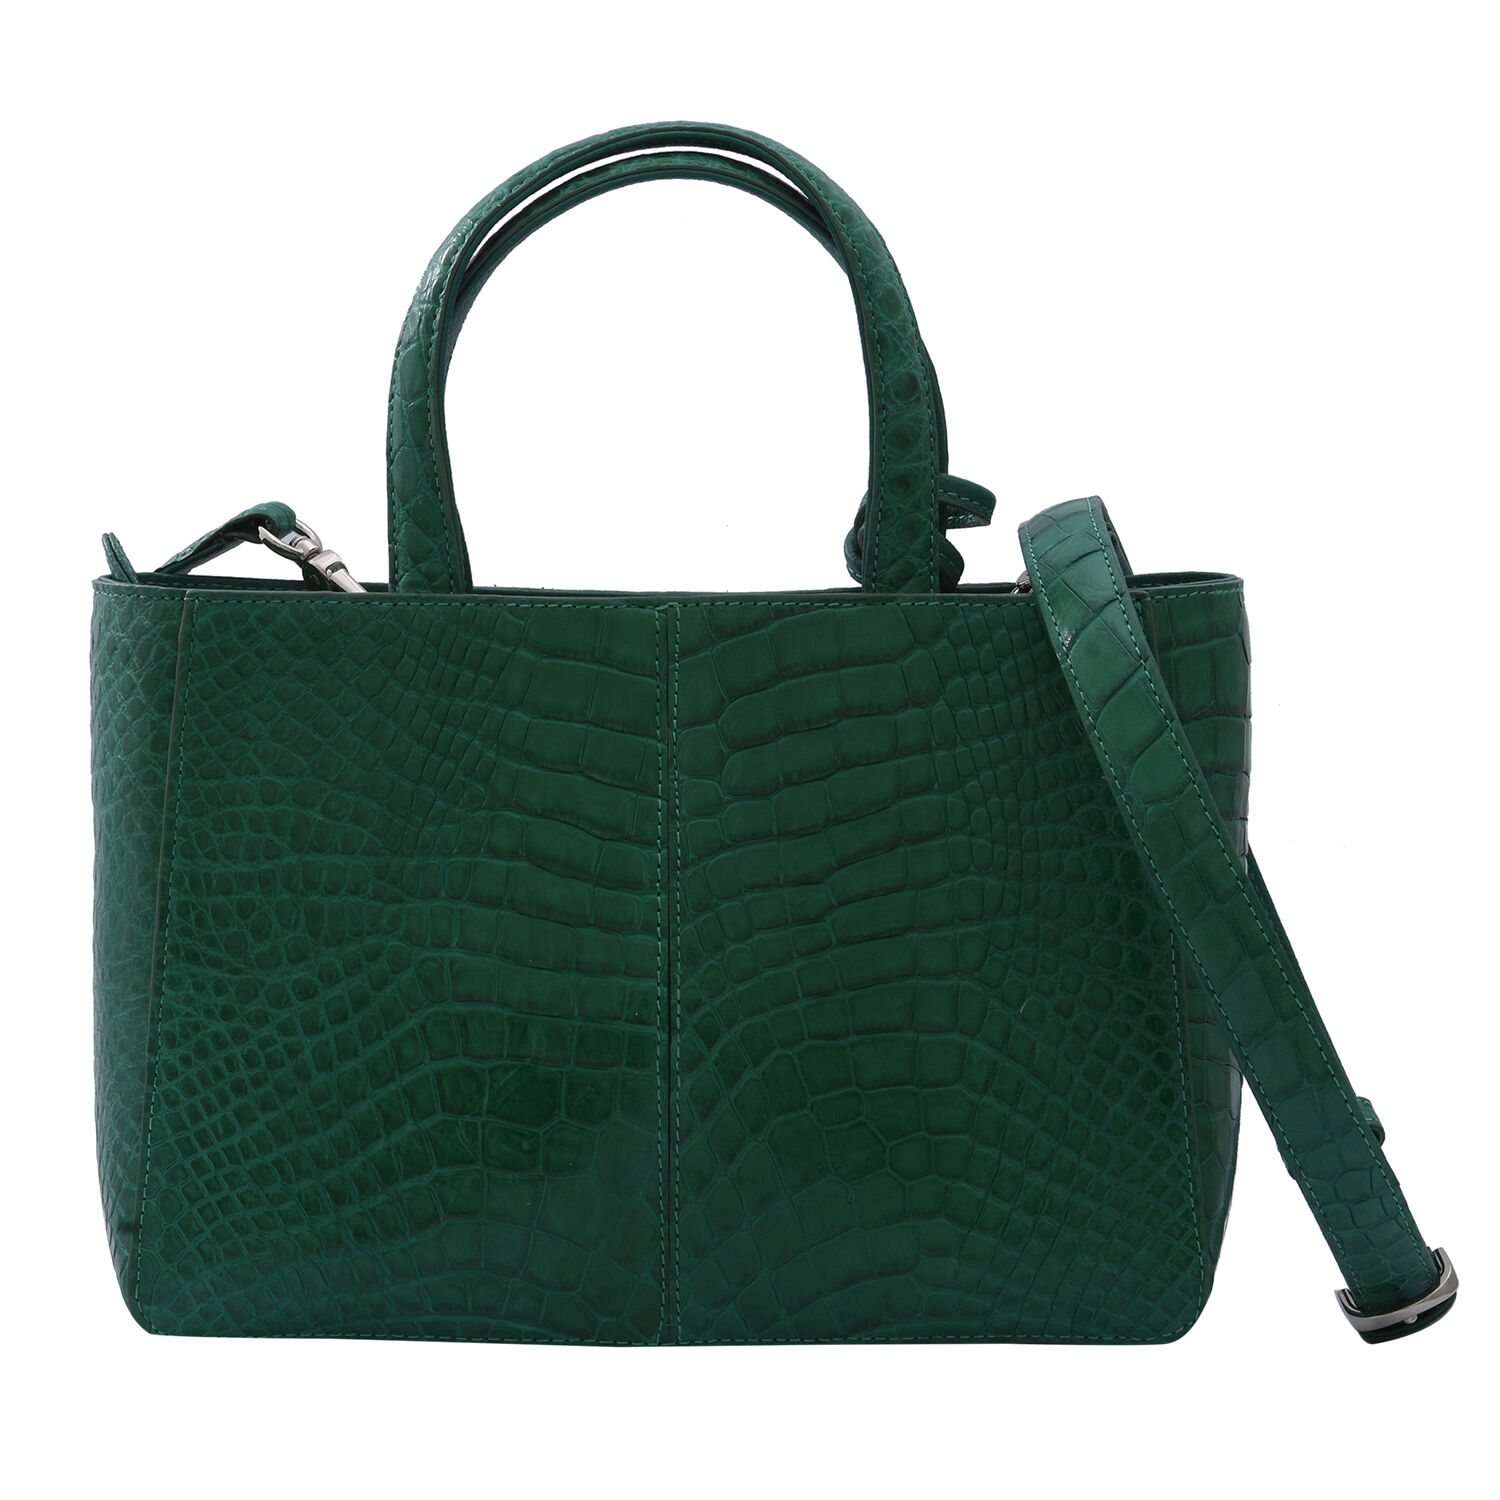 Green Snake Print Leather Tote Bag GENUINE Leather Bag Oversize Large Leather Tote Bag Lady Fashion Bag Green Weddings Accessories Bags & Purses 